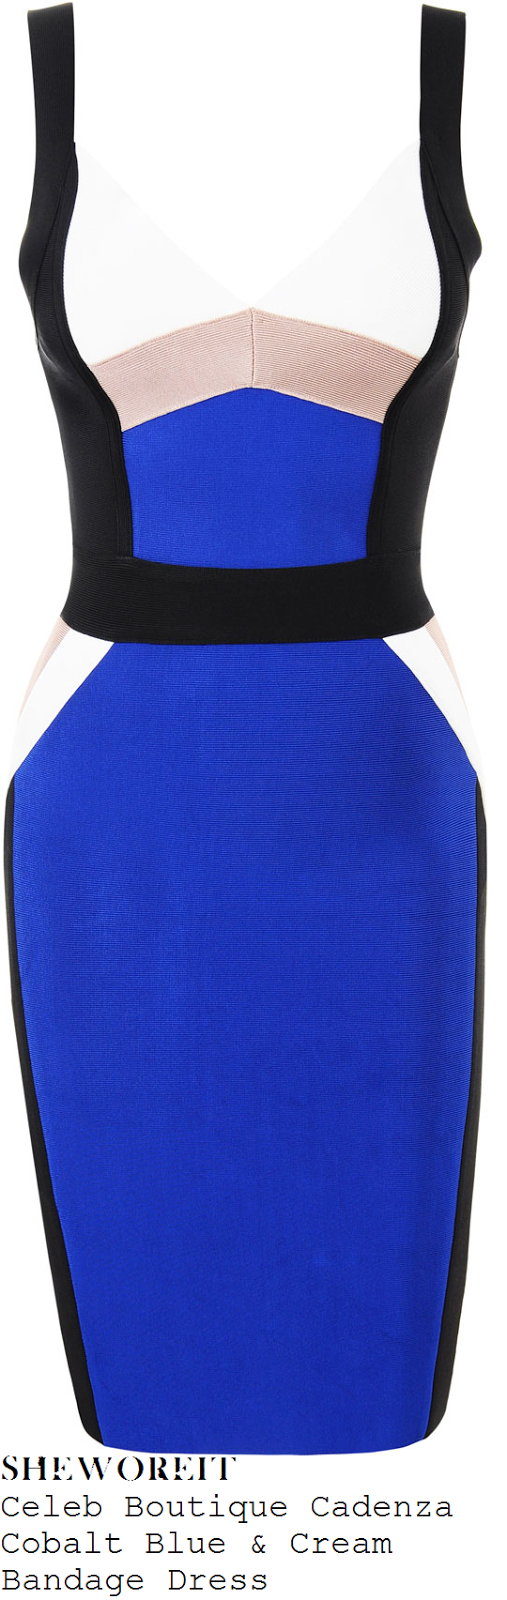 adrienne-bailon-bright-blue-taupe-white-and-black-sleeveless-v-neck-bodycon-bandage-dress